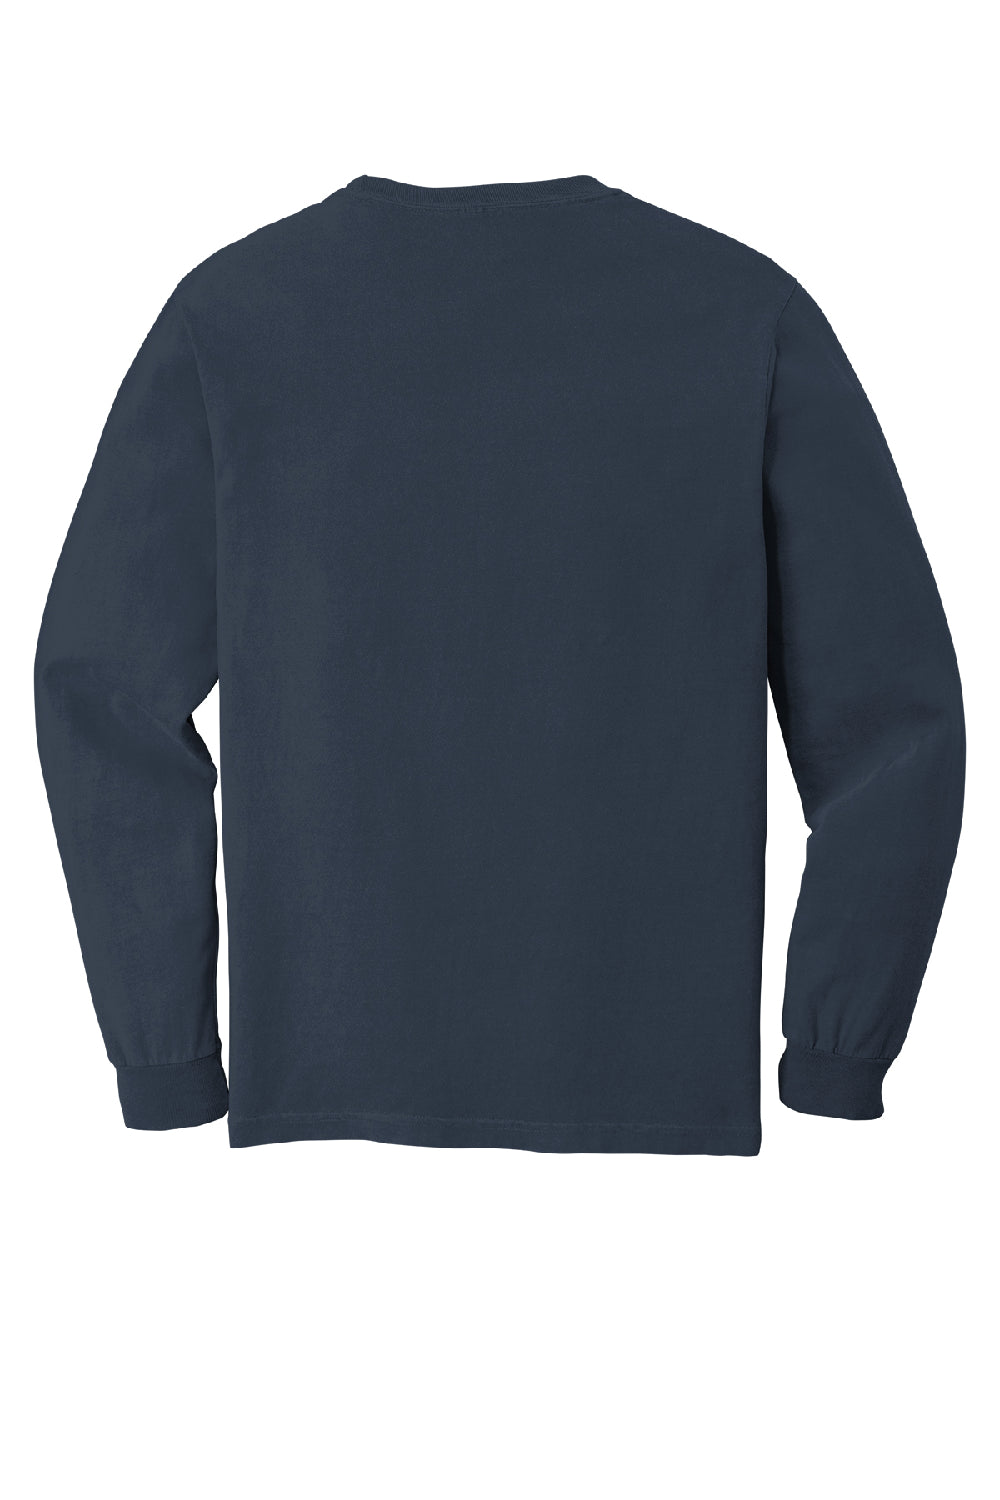 Comfort Colors 6014/C6014 Mens Long Sleeve Crewneck T-Shirt Midnight Navy Blue Flat Back